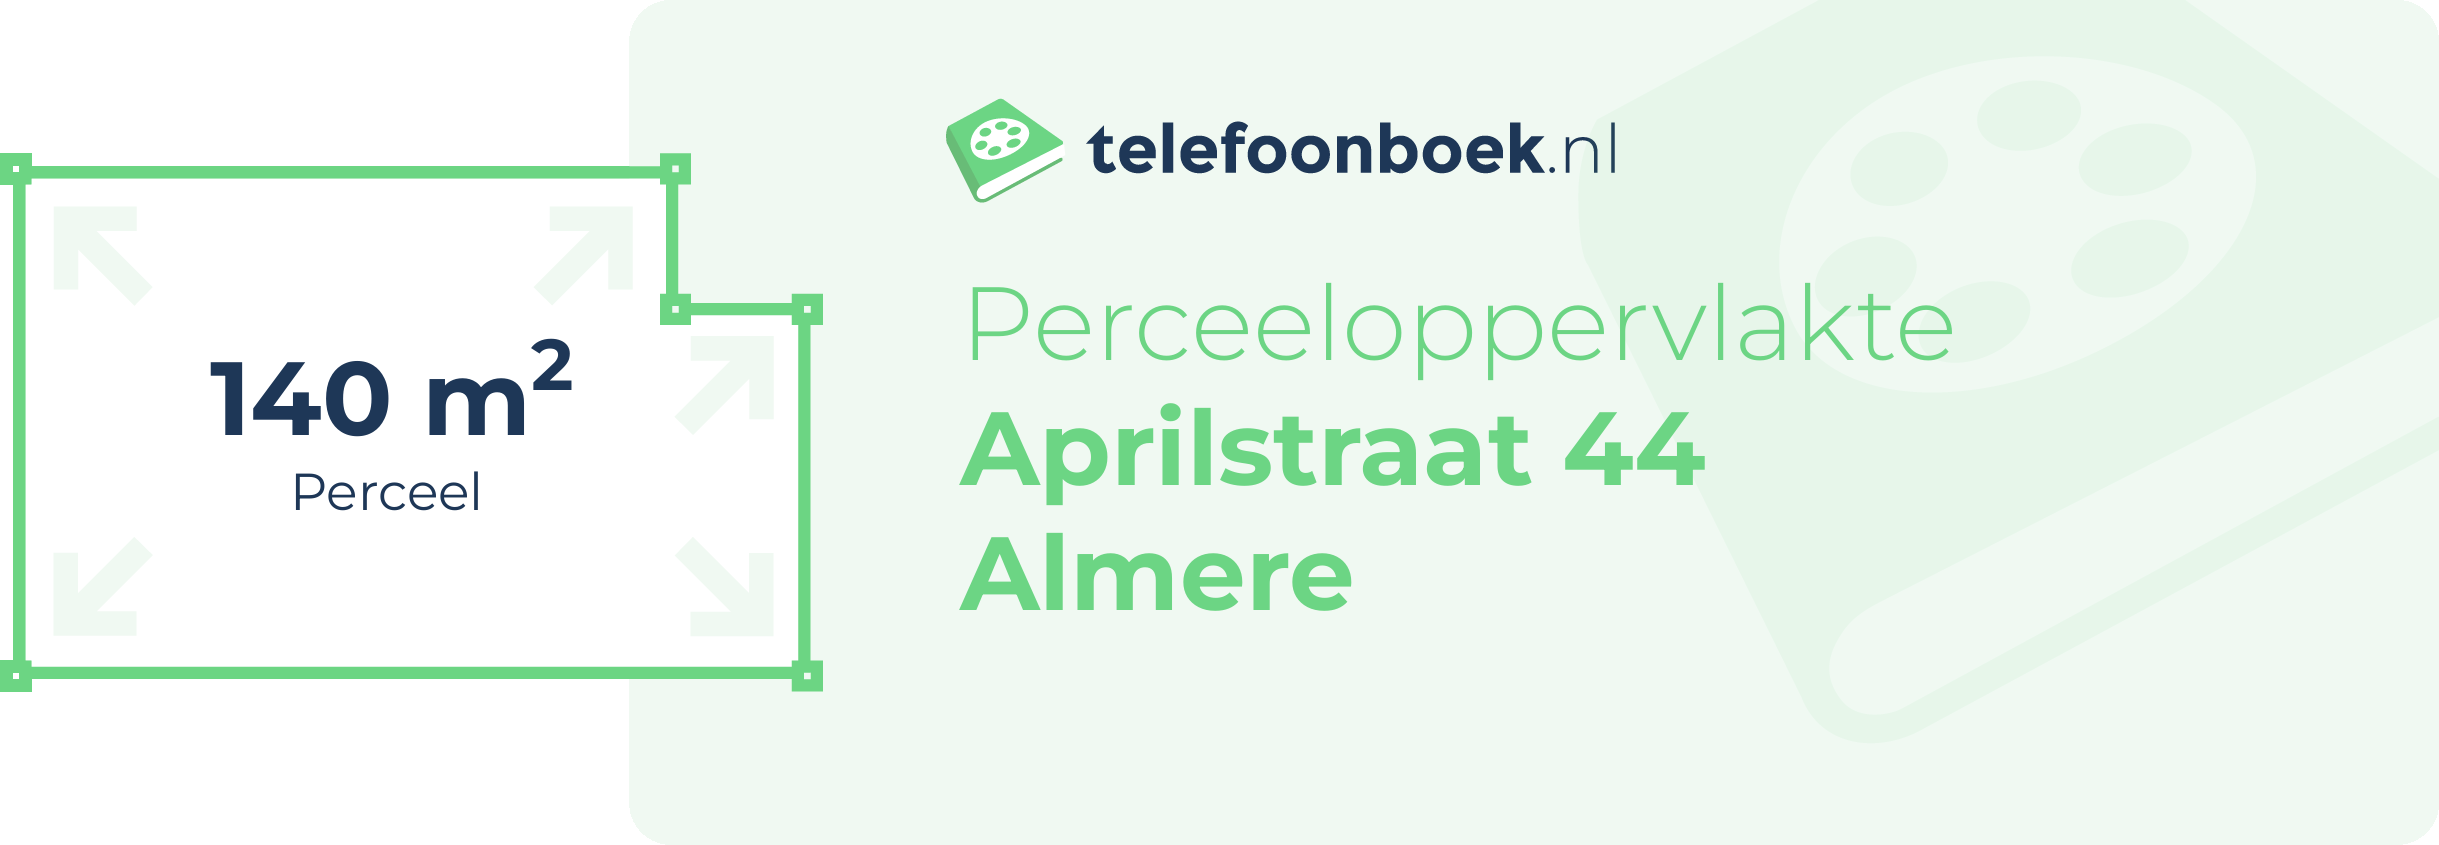 Perceeloppervlakte Aprilstraat 44 Almere